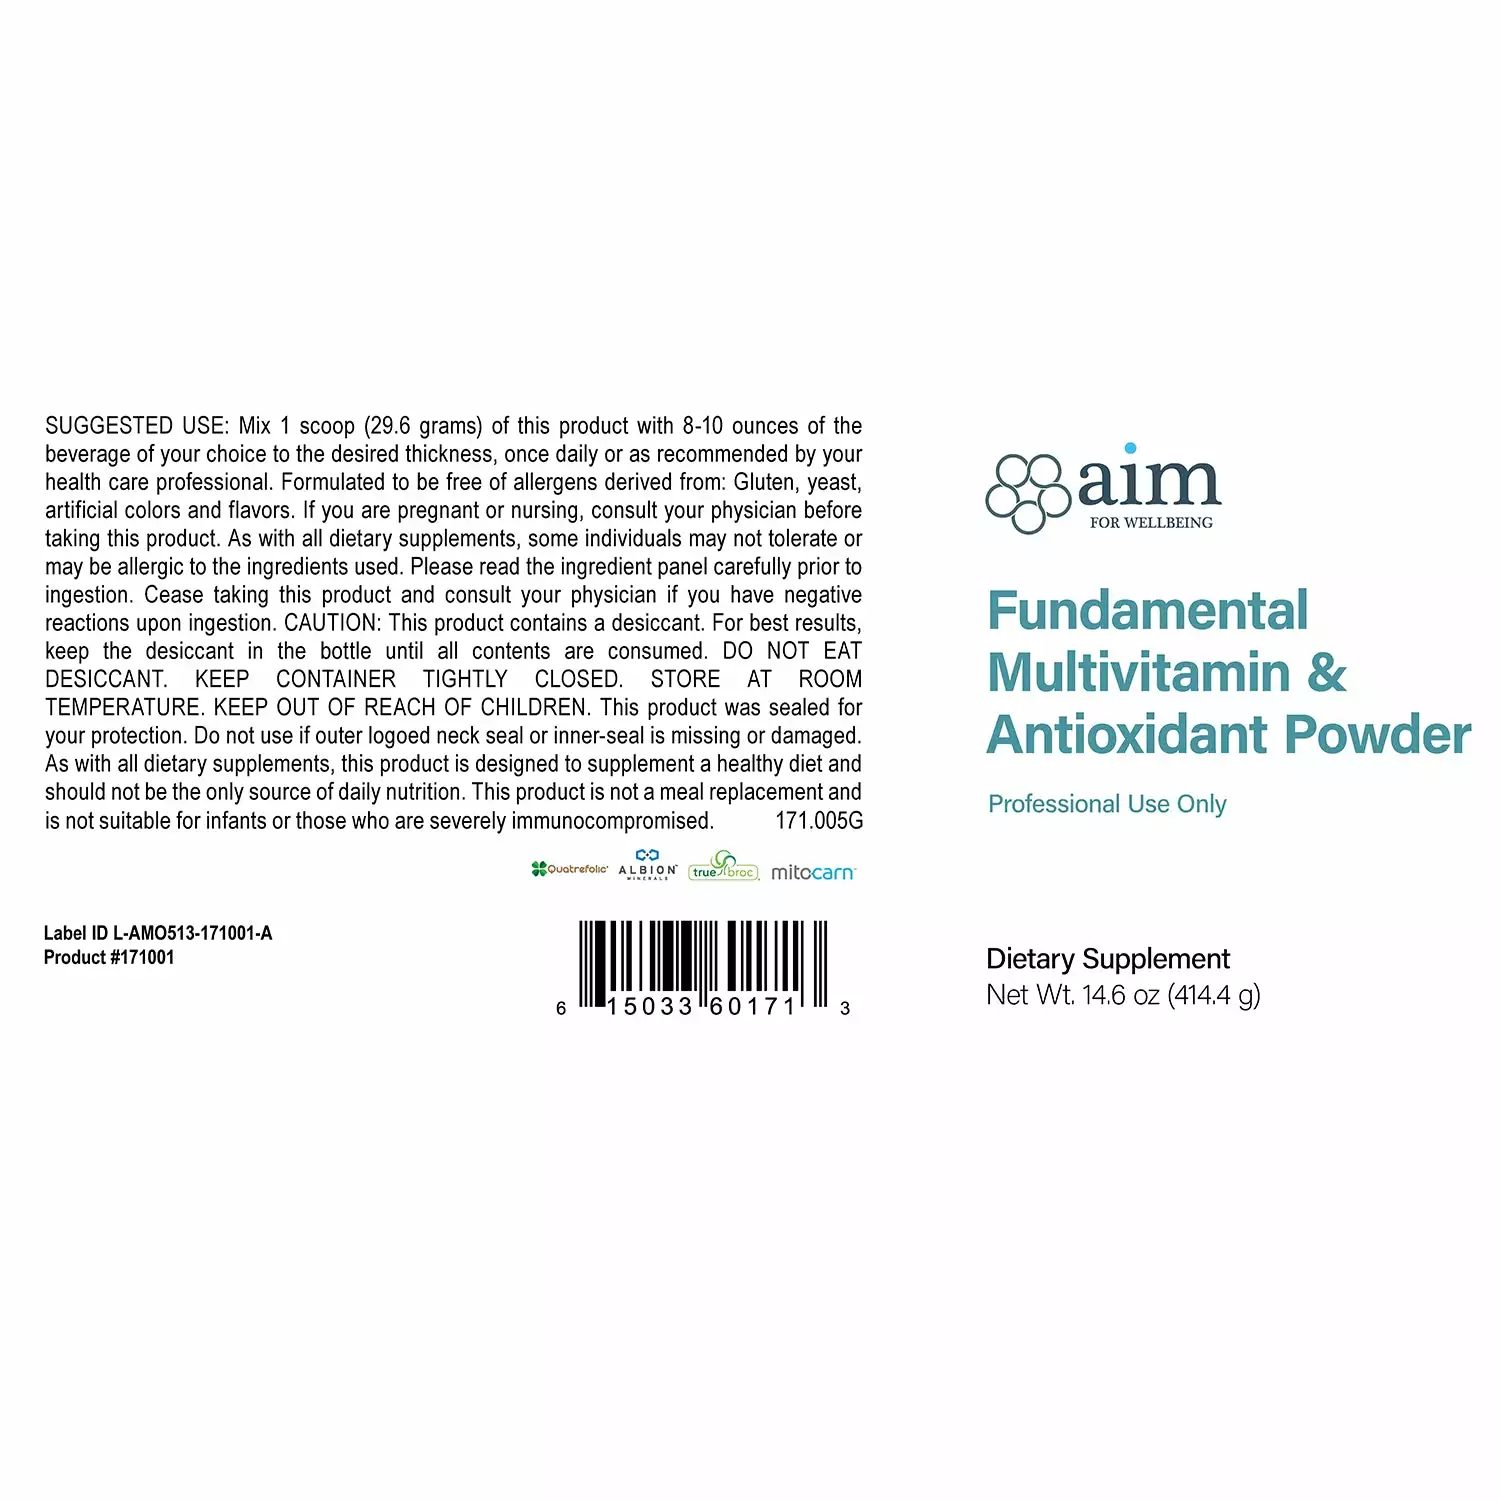 Fundamental Multivitamin & Antioxidant Powder